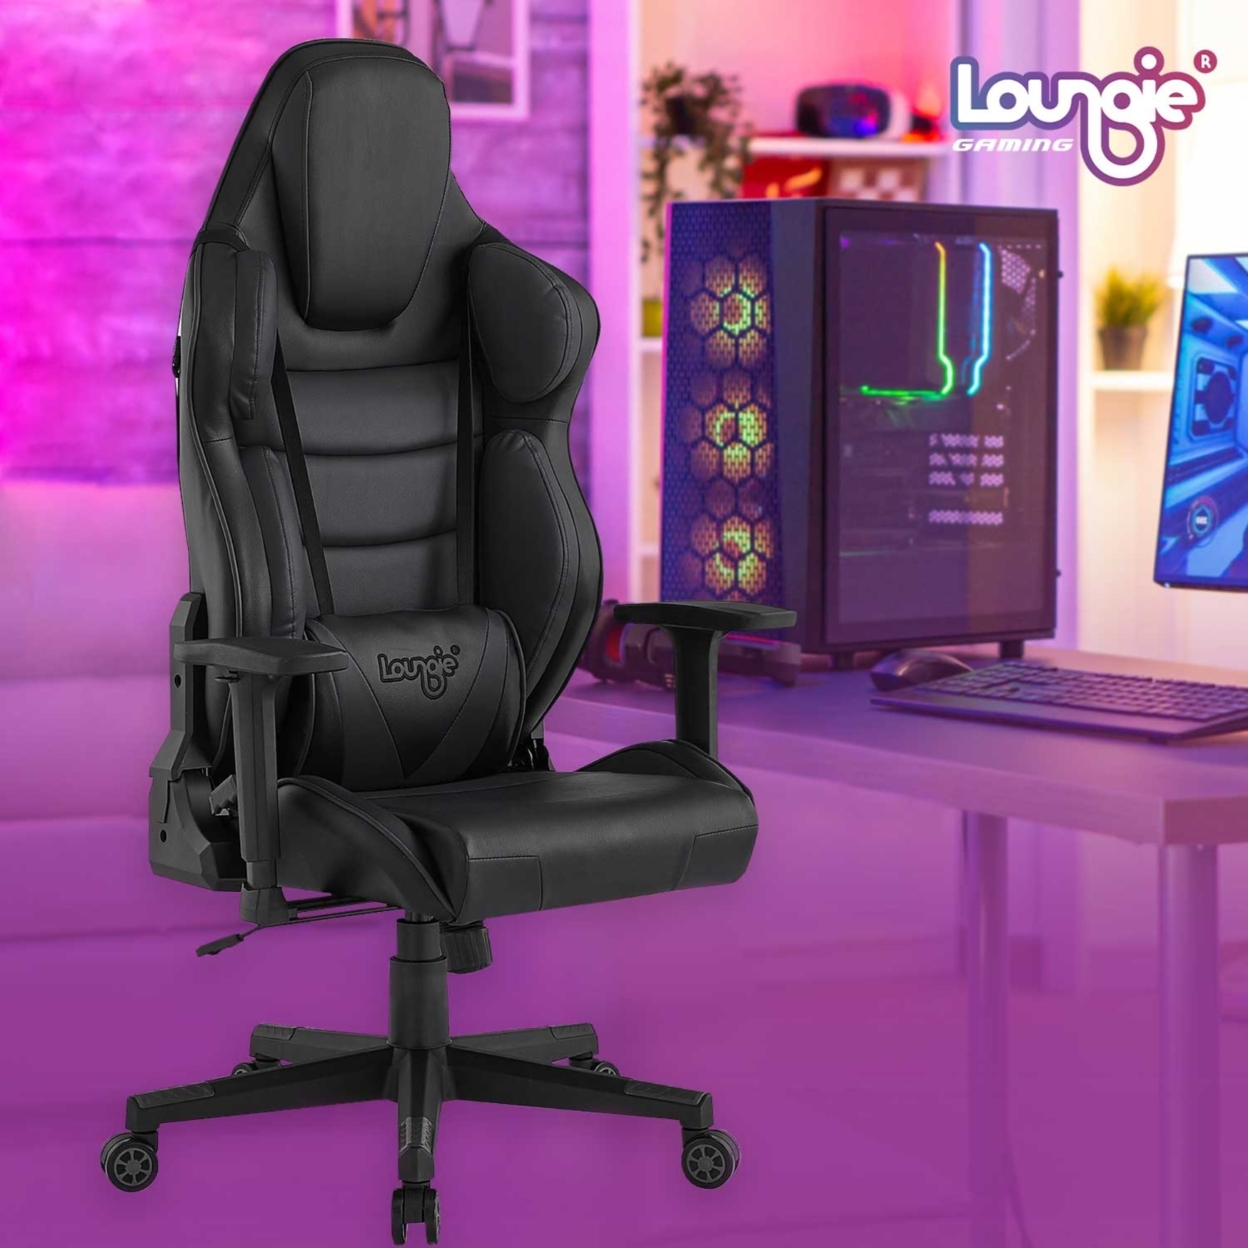 Kiya Game Chair-Swivel, Adjustable Back Angle, Seat Height and Armrest-Big Headrest, 360 Degree Rotation-Lumbar Support Cushion - black